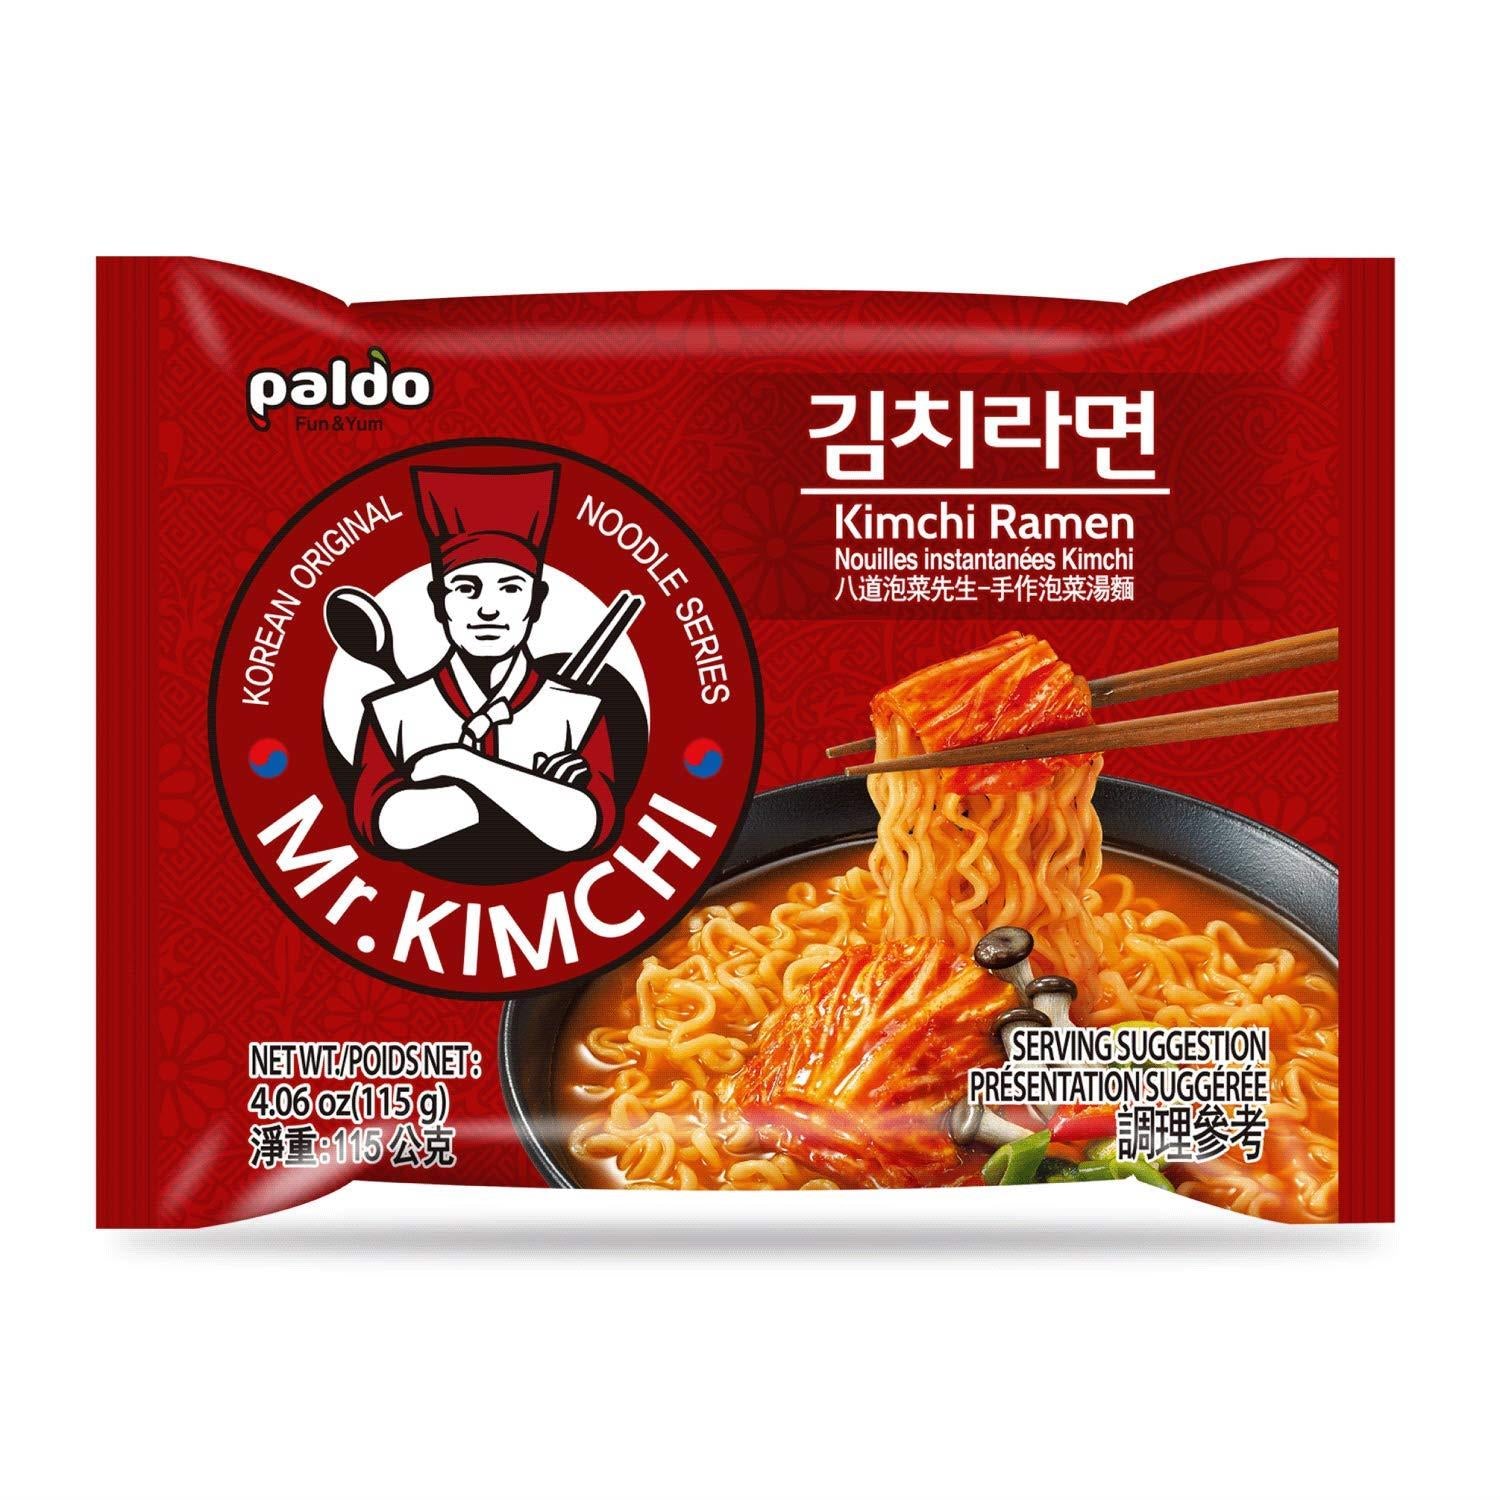 Paldo Fun & Yum Kimchi Ramen Instant Noodles with Soup, Kimchi Based Spicy Broth, Best Oriental Style, Original Korean Ramyun, Spicy Ramen Challenge, K-Food, 김치라면, Family Pack (115g x 16)